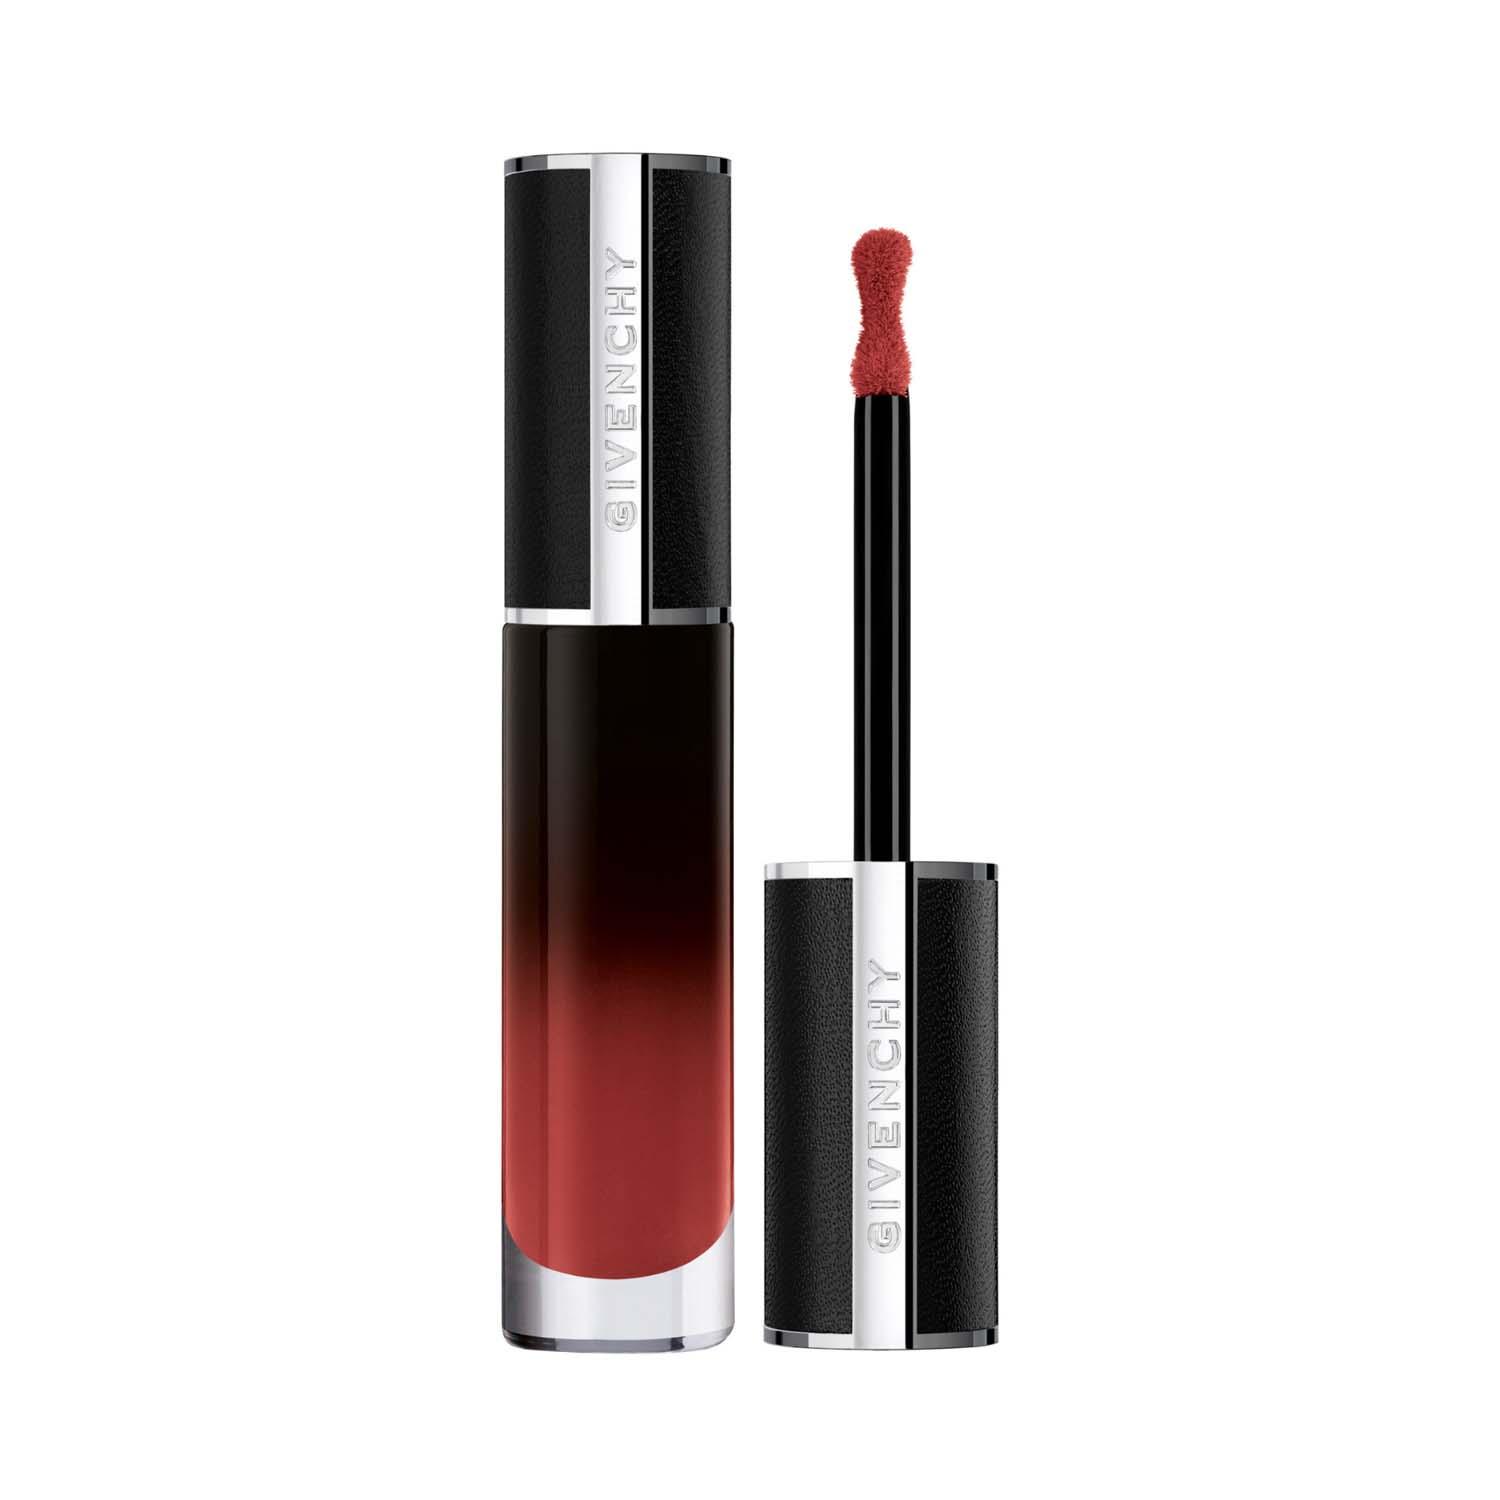 Givenchy | Givenchy Le Rouge Interdit Cream Velvet Liquid Lipstick - N41 Brun Erable (6.5 ml)